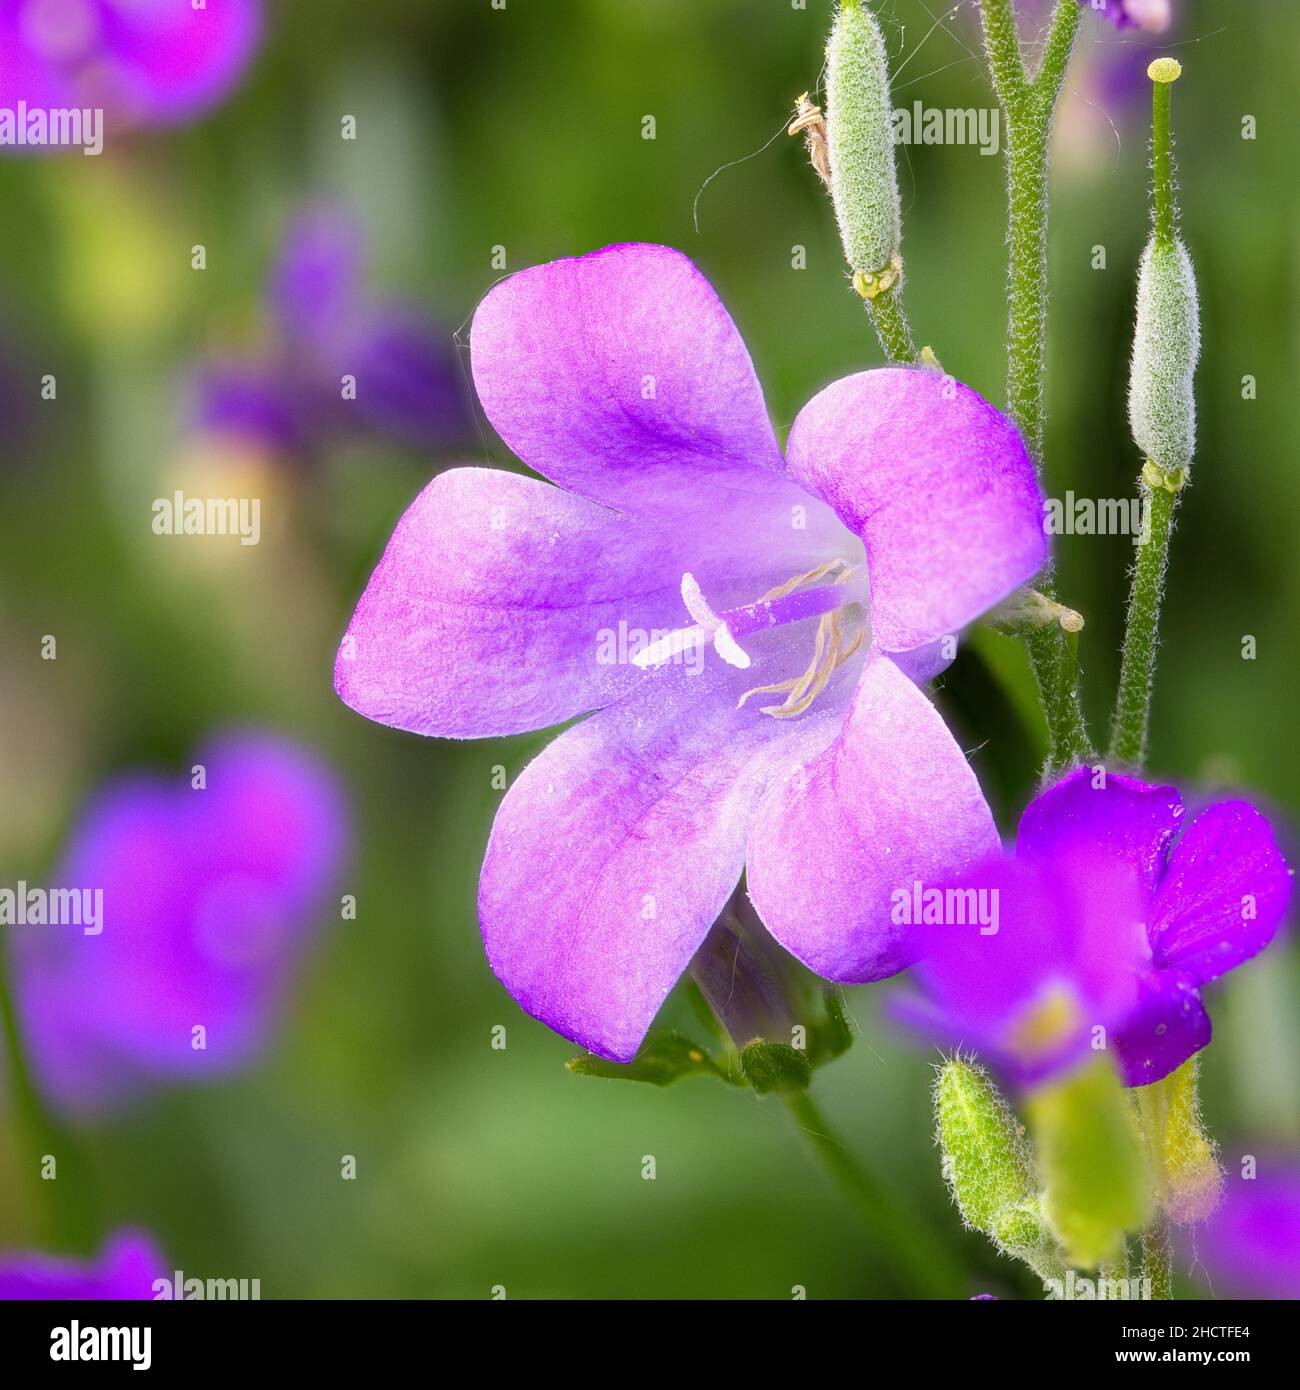 Closeup shot of Viola Riviniana flowers on blurred background Stock Photo